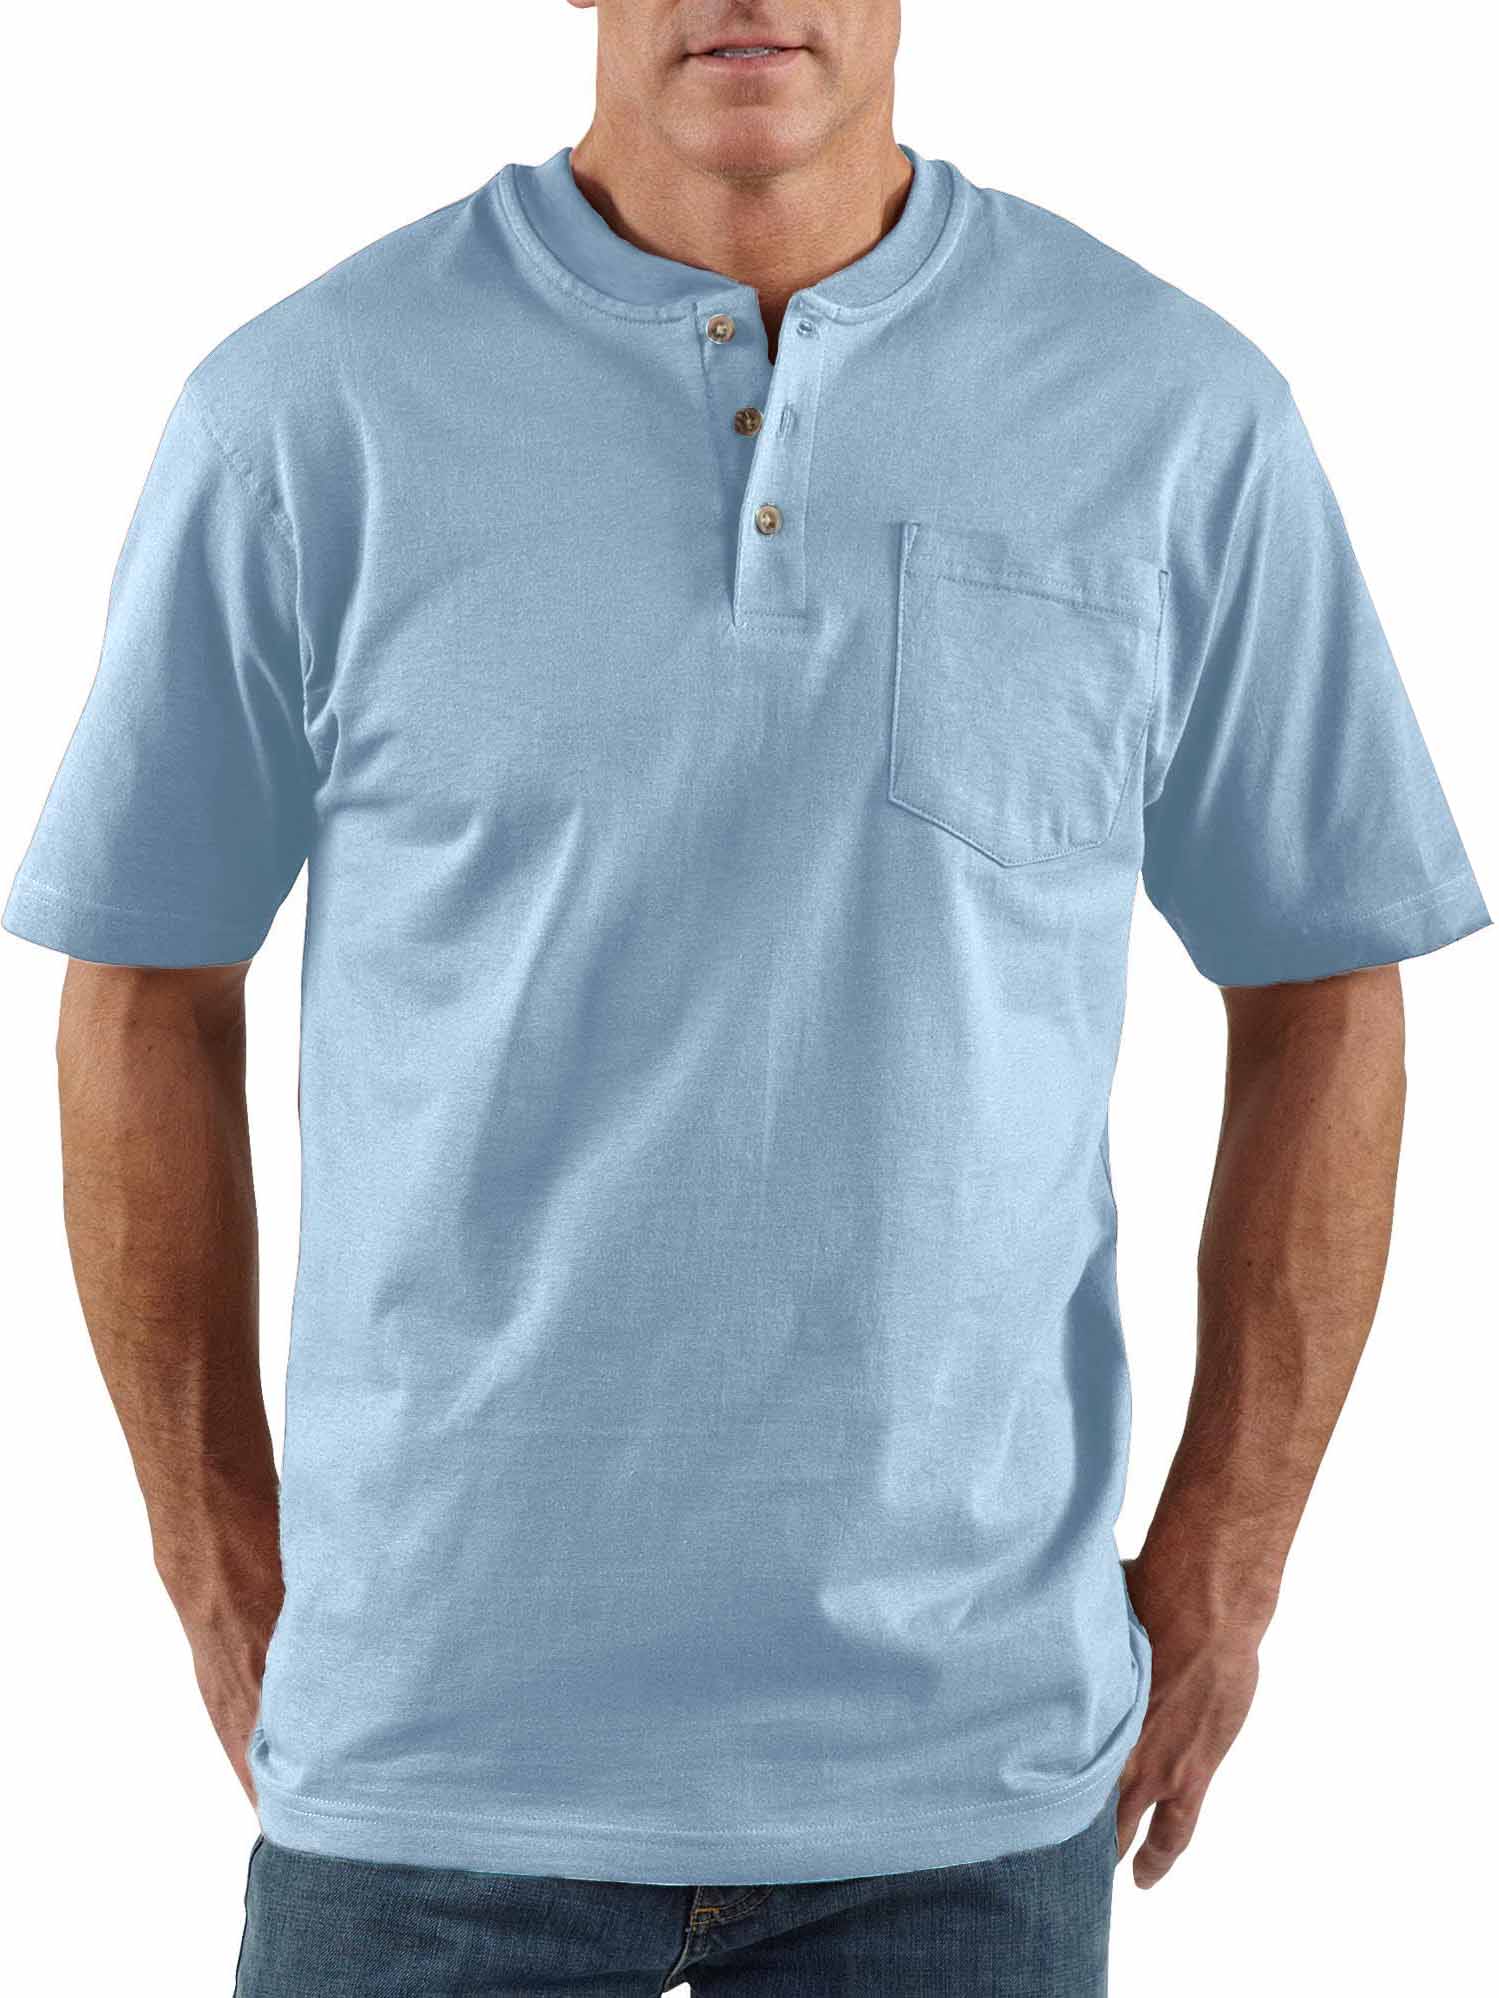 Men's Casual Pocket Short Sleeve Henley Shirt